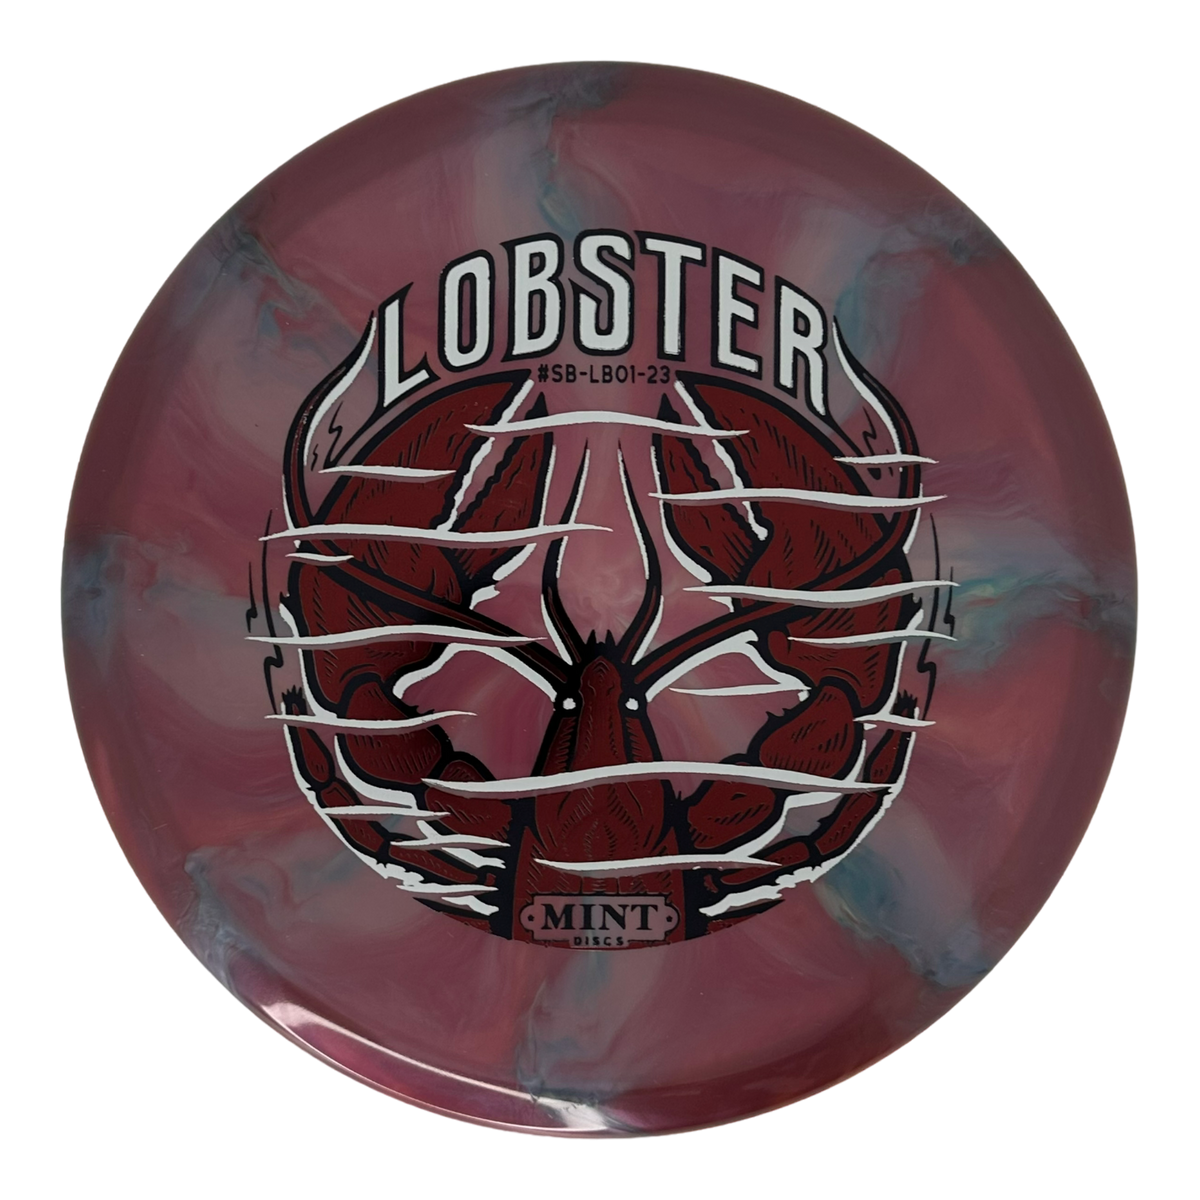 Mint Discs Sublime Swirl Lobster